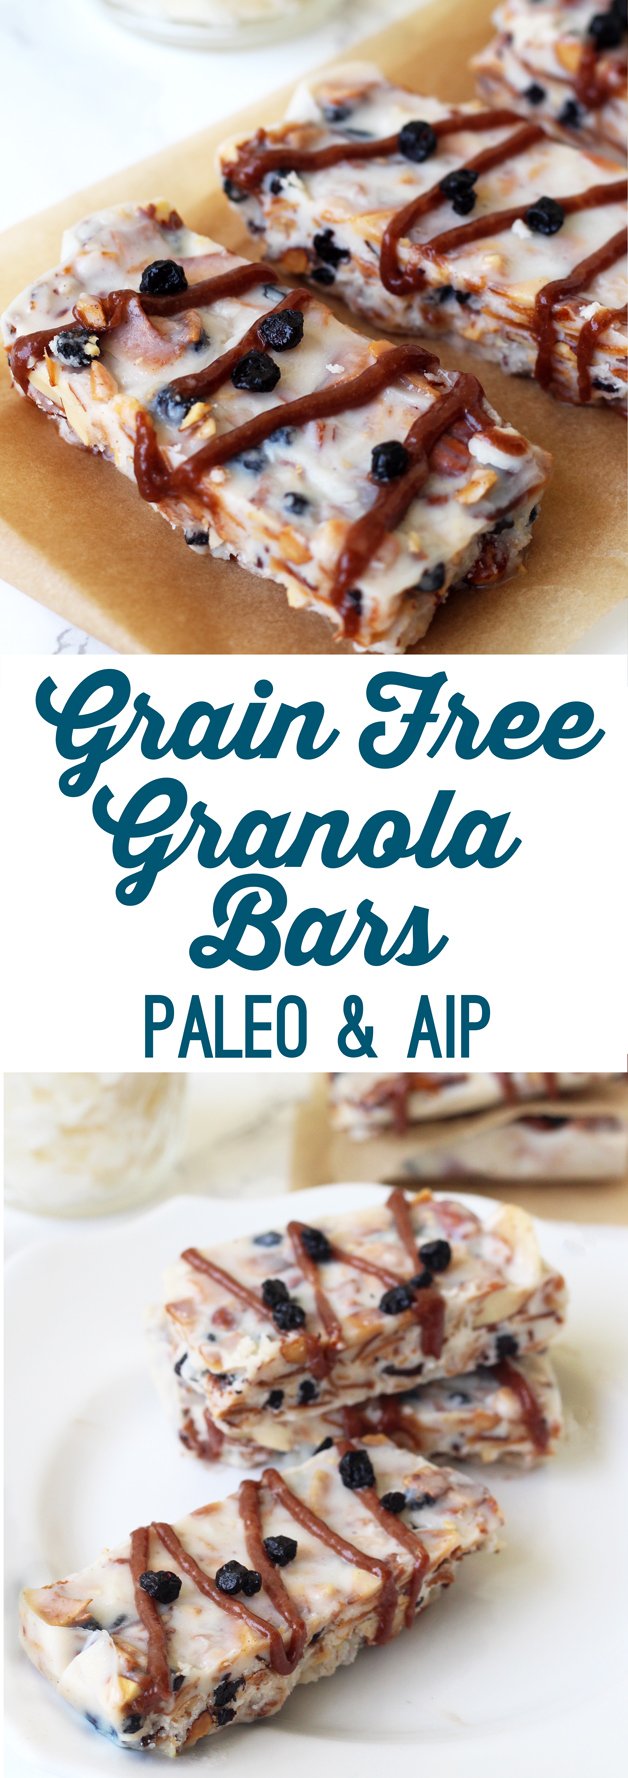 Grain Free Granola Bars (paleo & AIP)